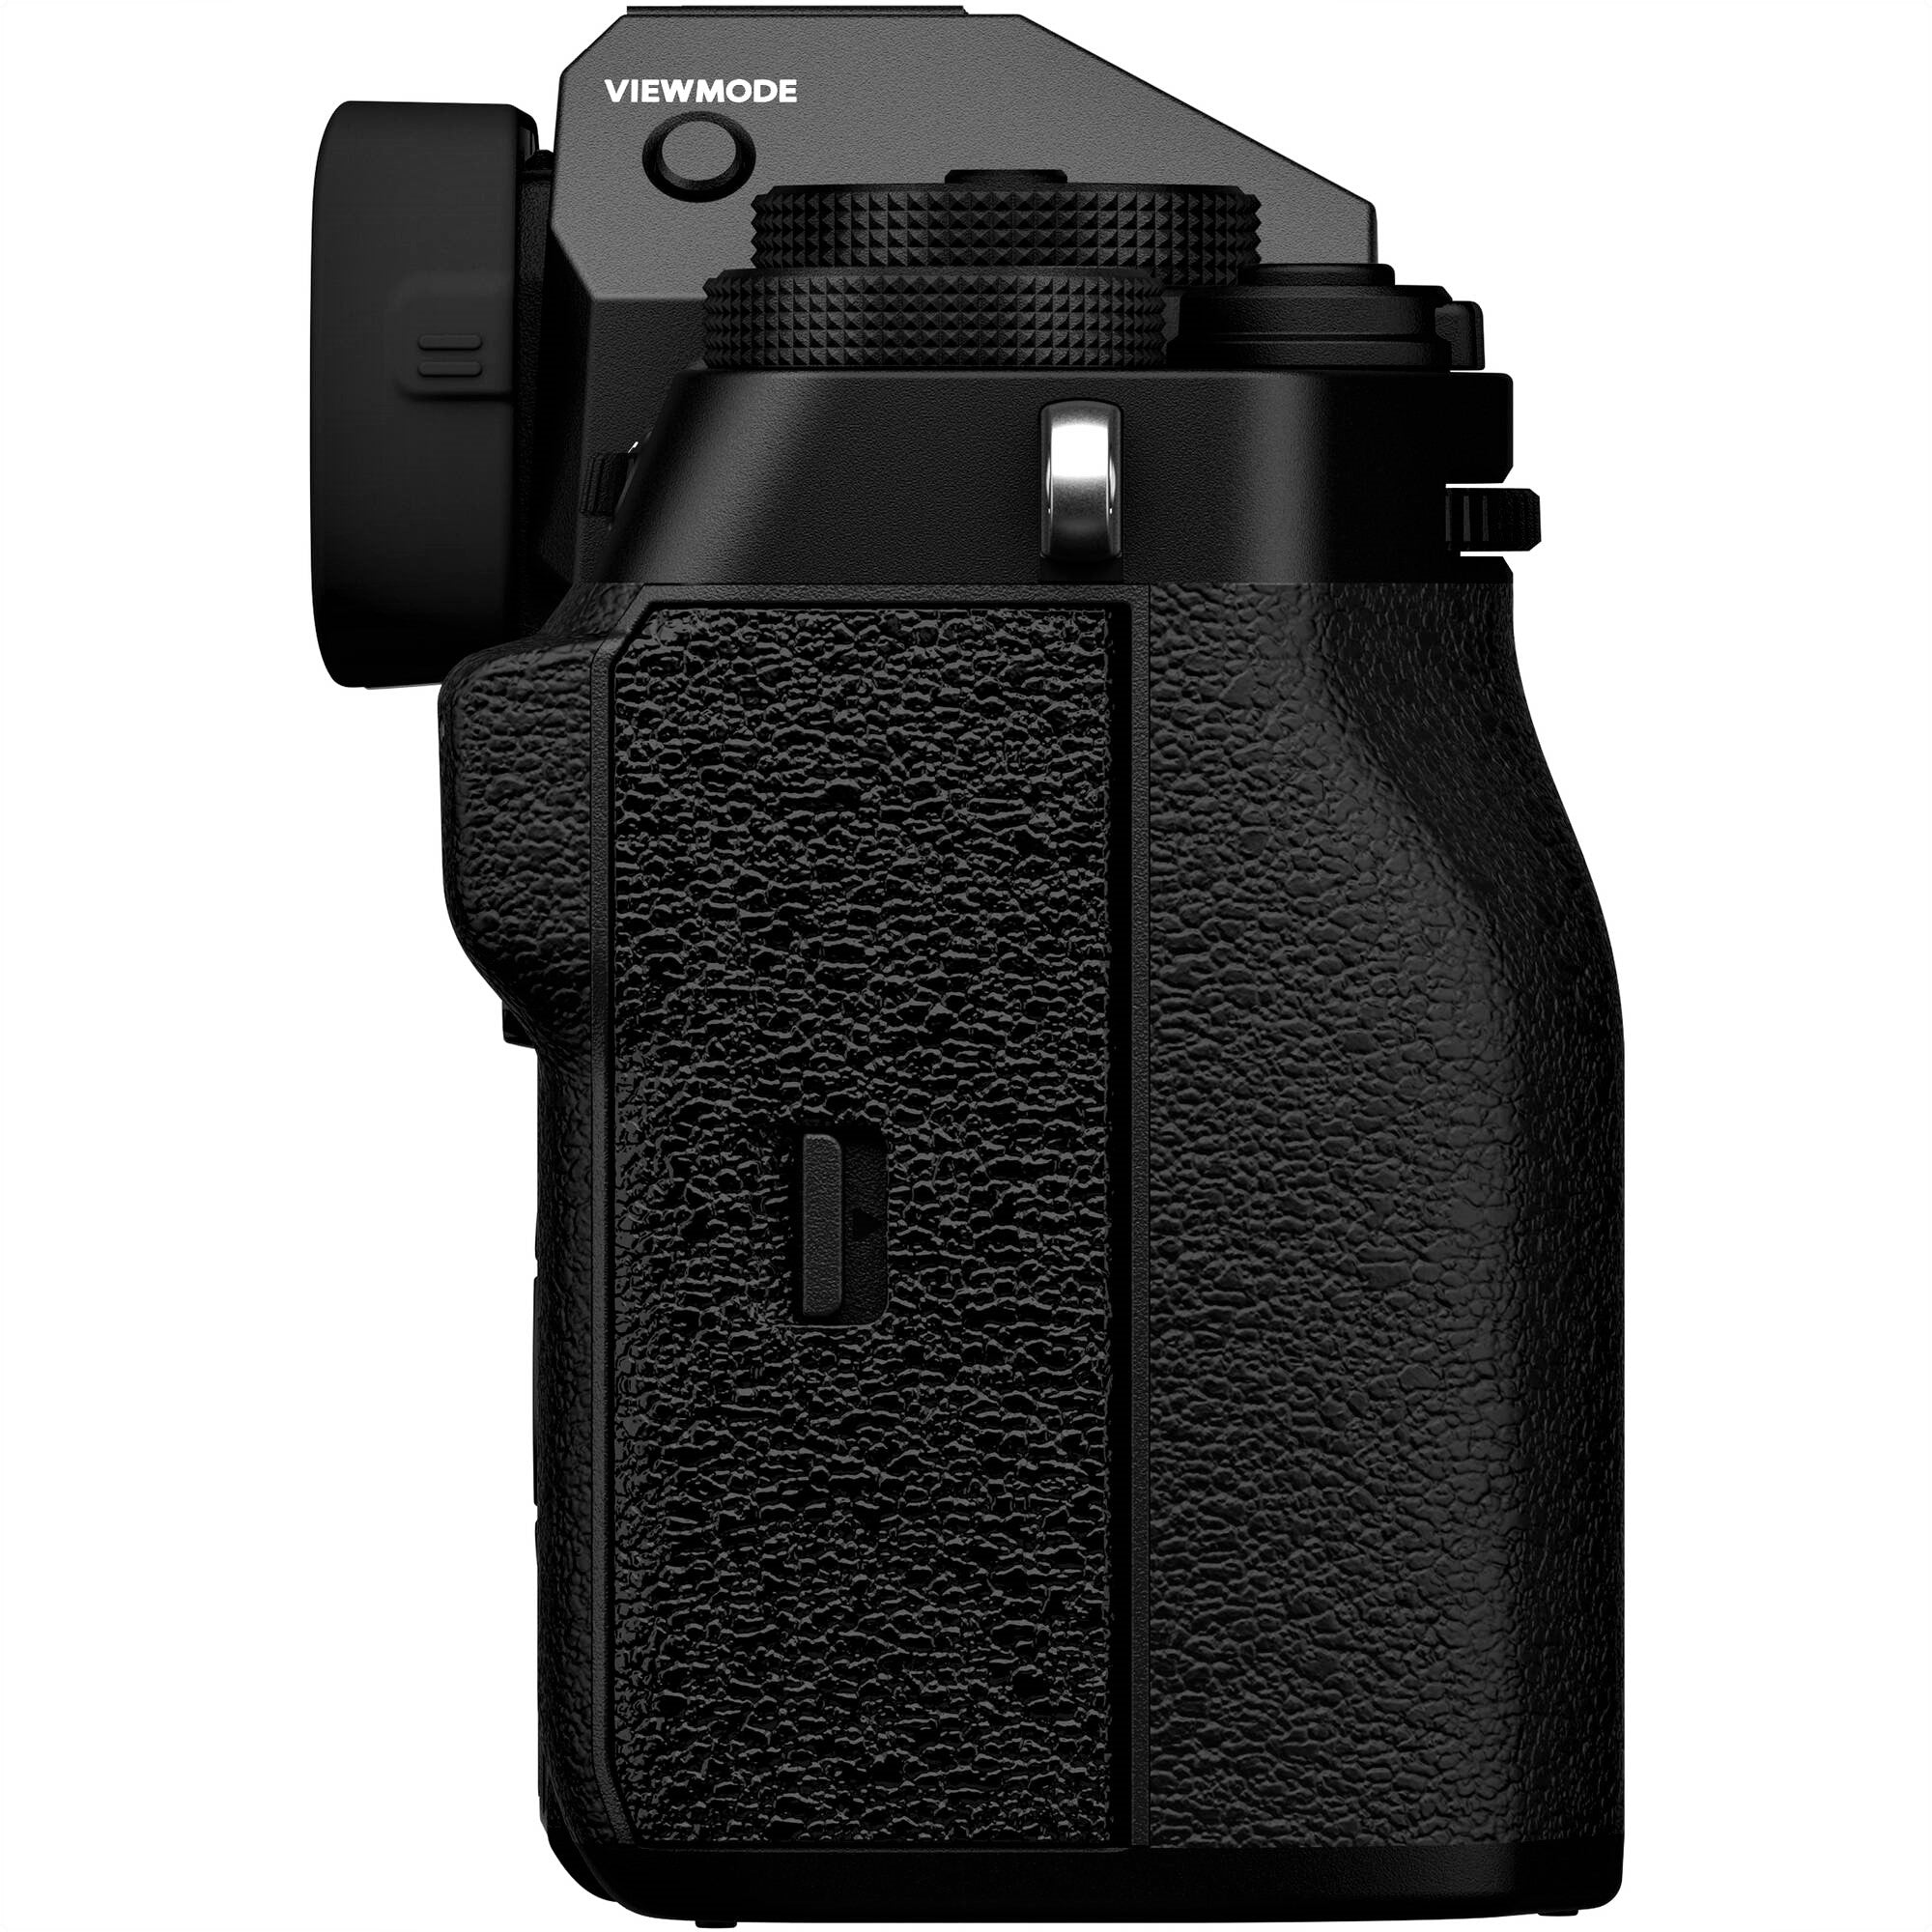 Fujifilm X-T5 Mirrorless Camera with 18-55mm Lens (Black) - Side View